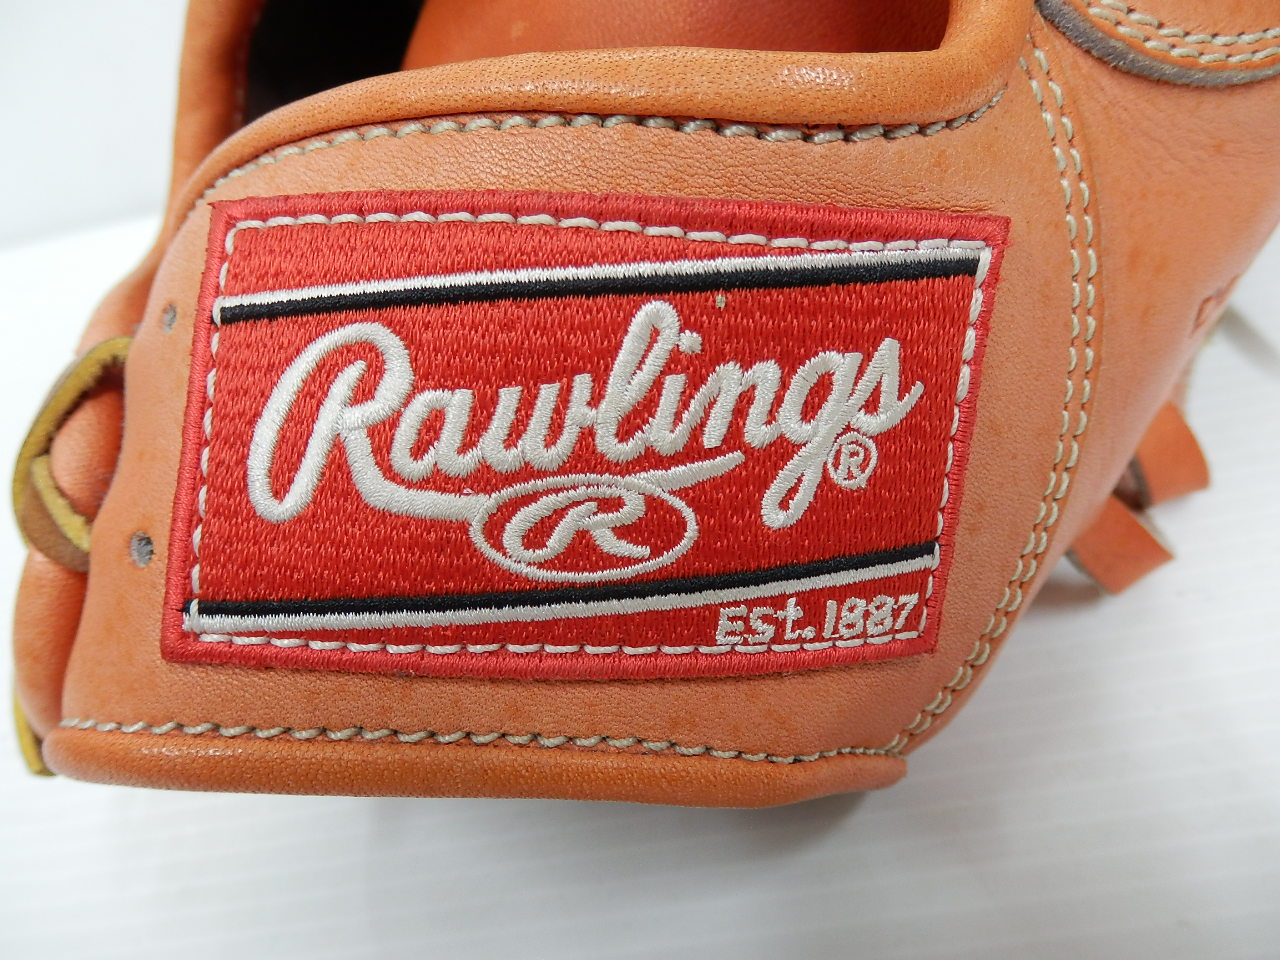 Rawlings ローリングス 硬式 内野手用 野球グローブ PRO46DP-ROR 袋付 中古囗T巛